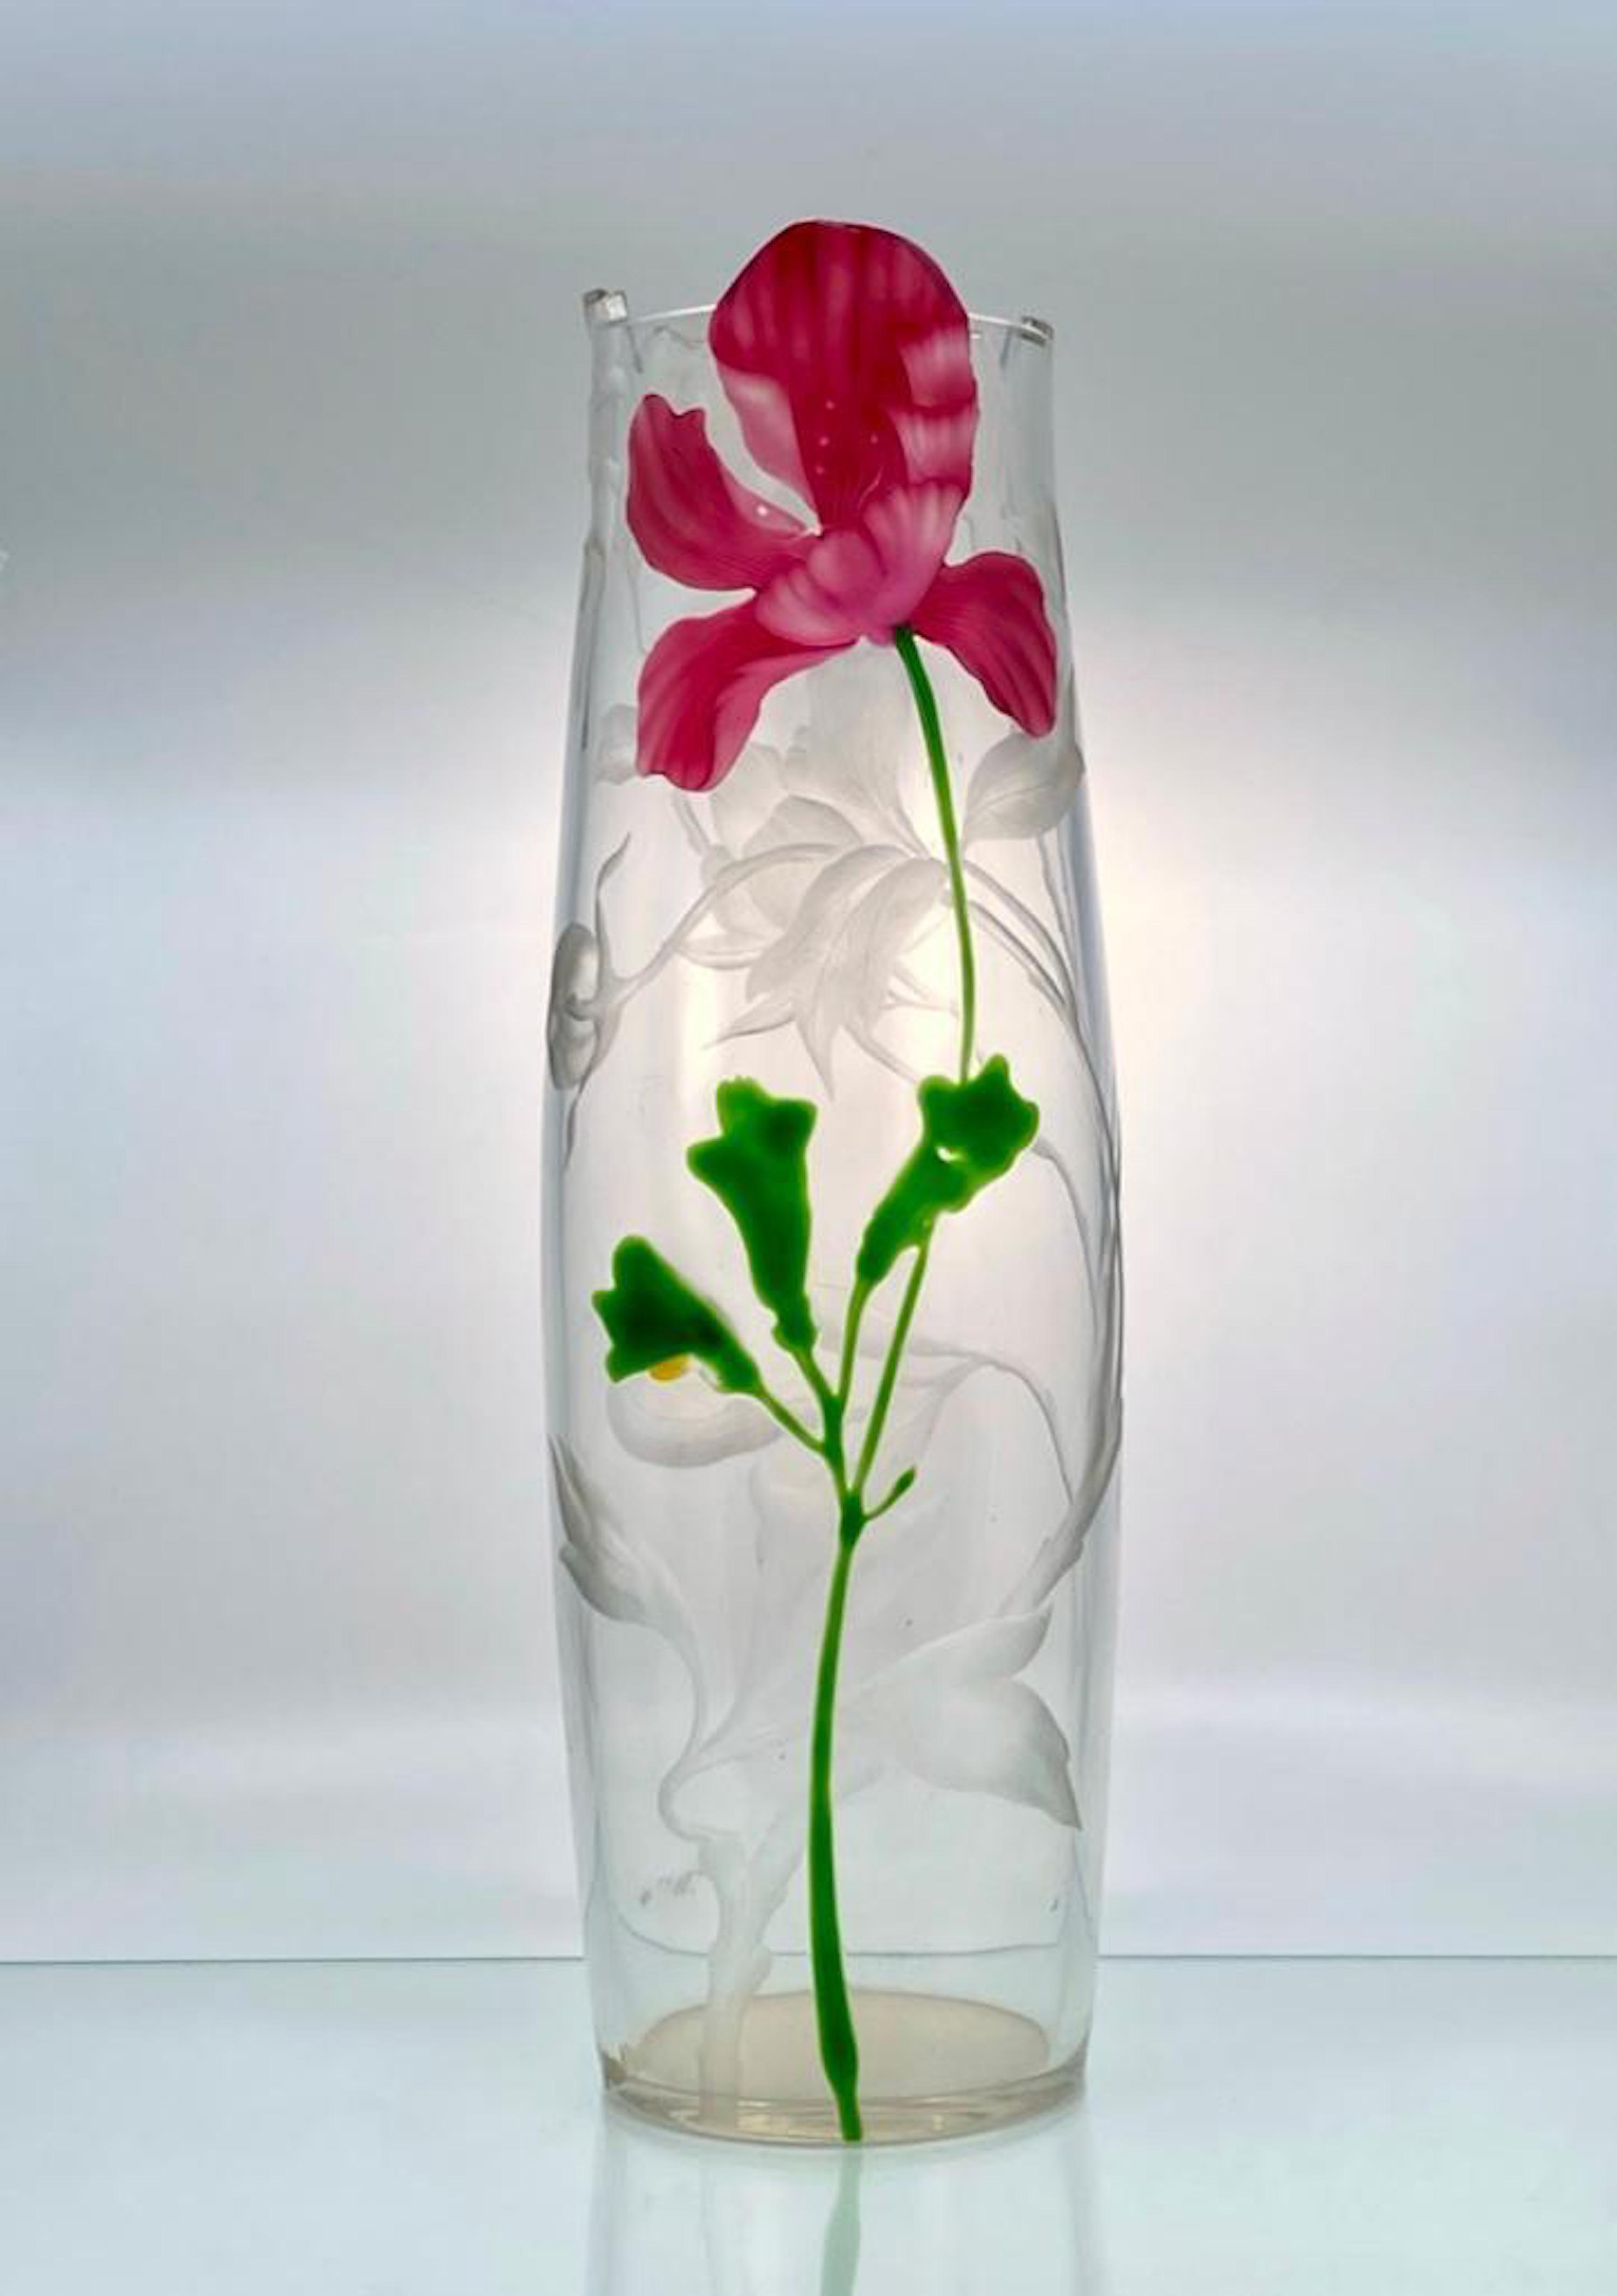 Moser floral design bulbous vase in clear glass, est. $1,000-$2,000